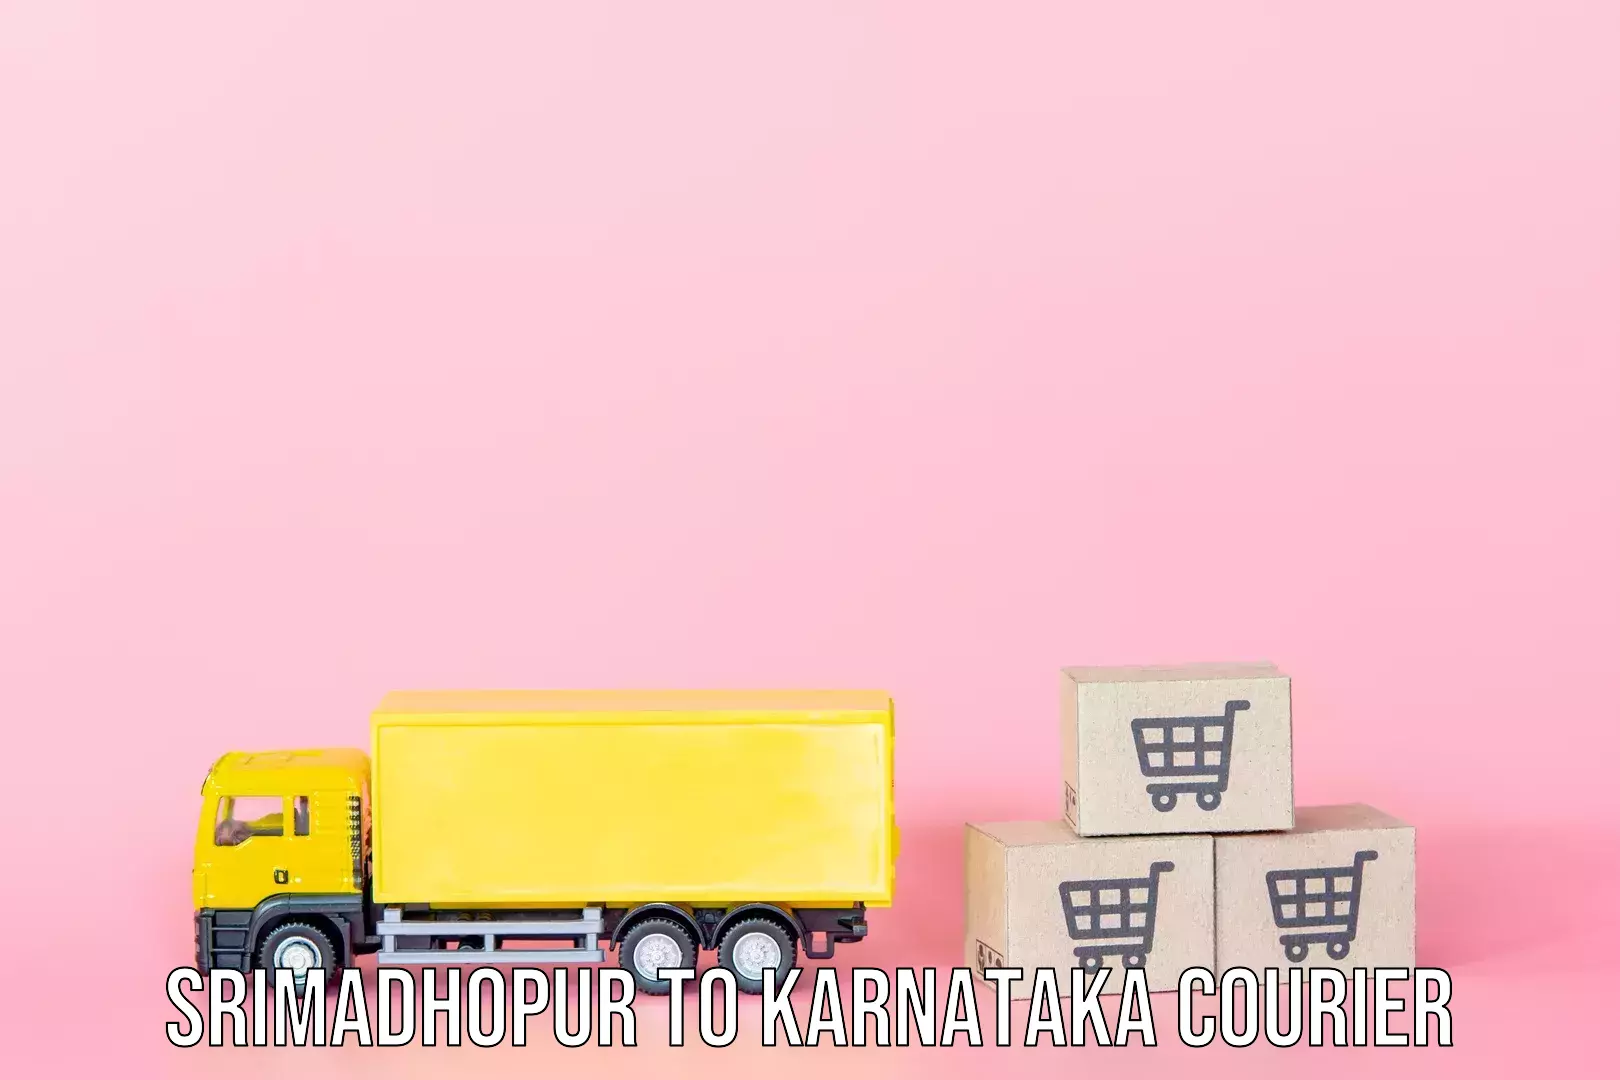 Luggage transport company Srimadhopur to Karnataka